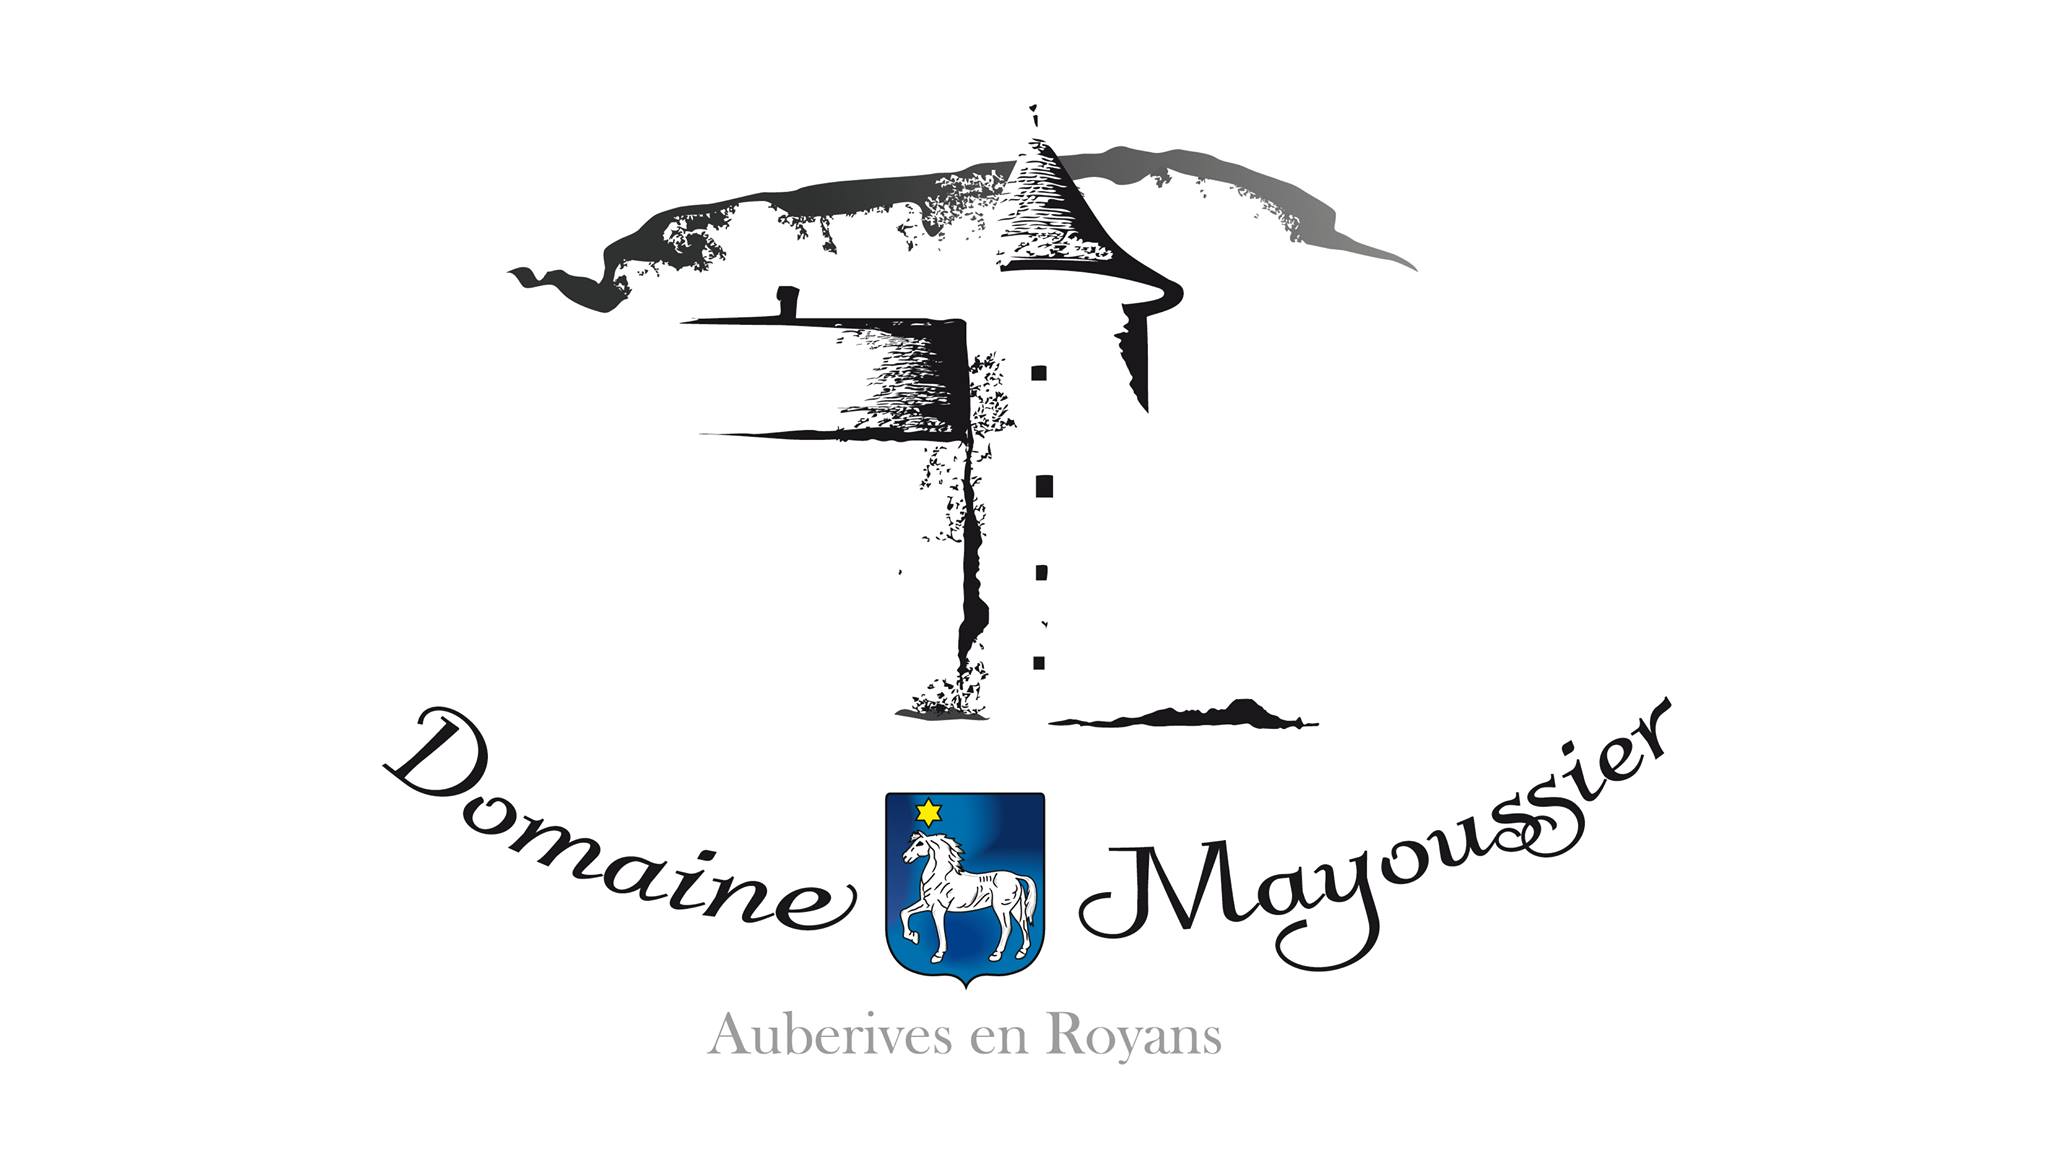 Domaine Mayoussier